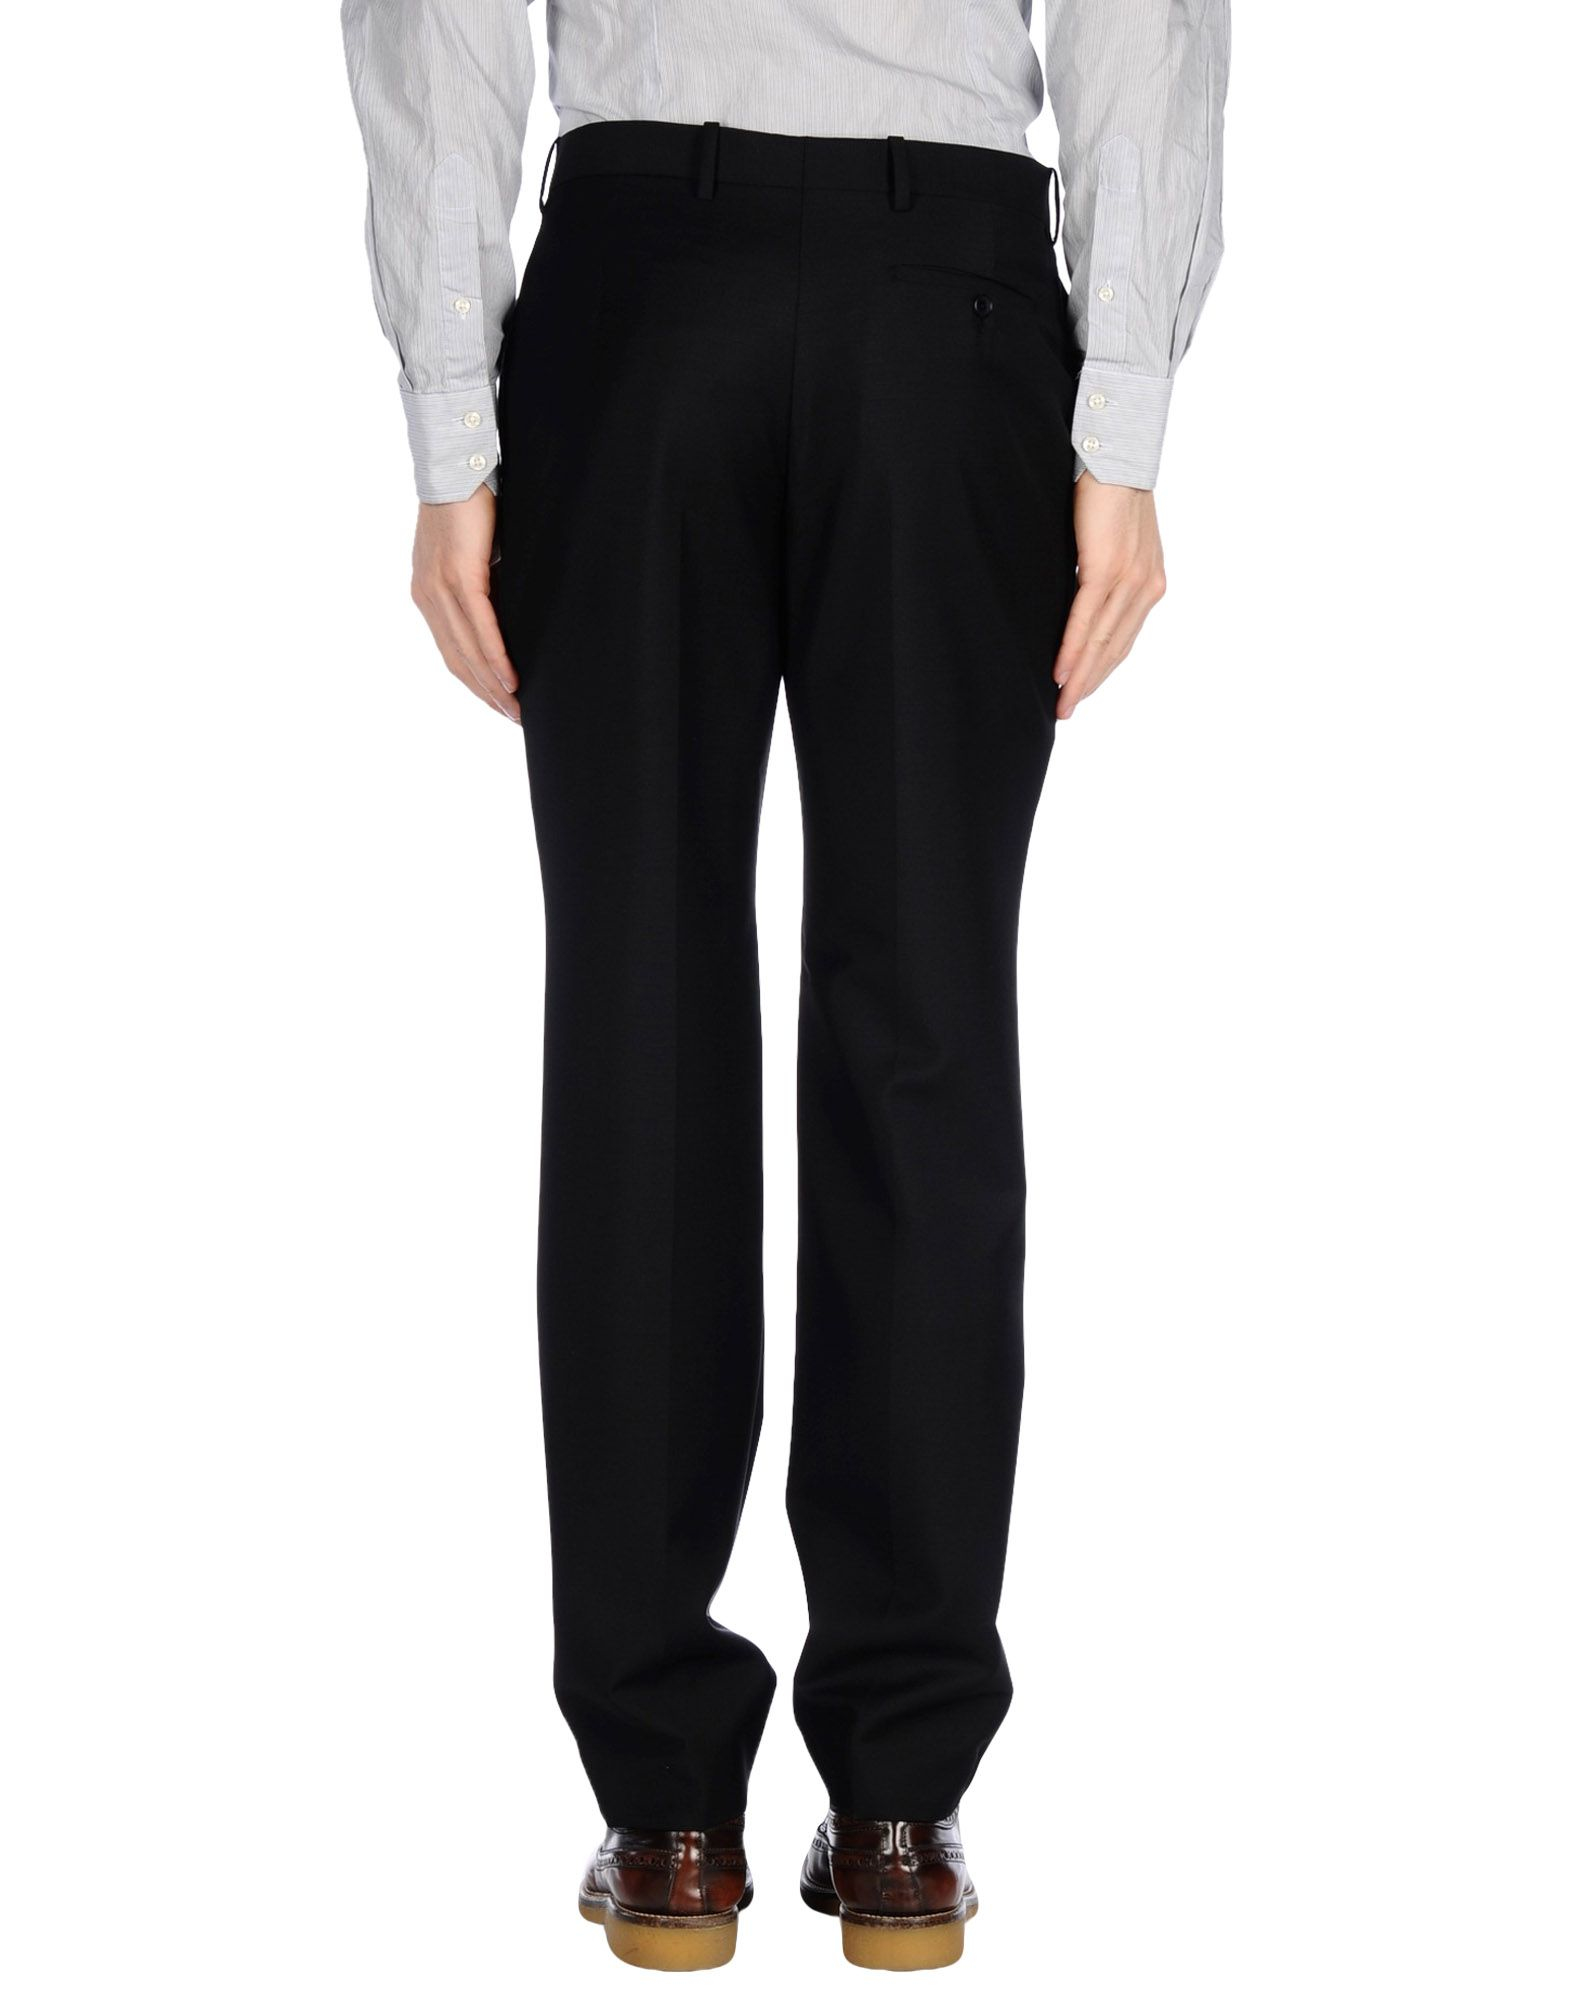 Lyst - Balenciaga Casual Pants in Black for Men